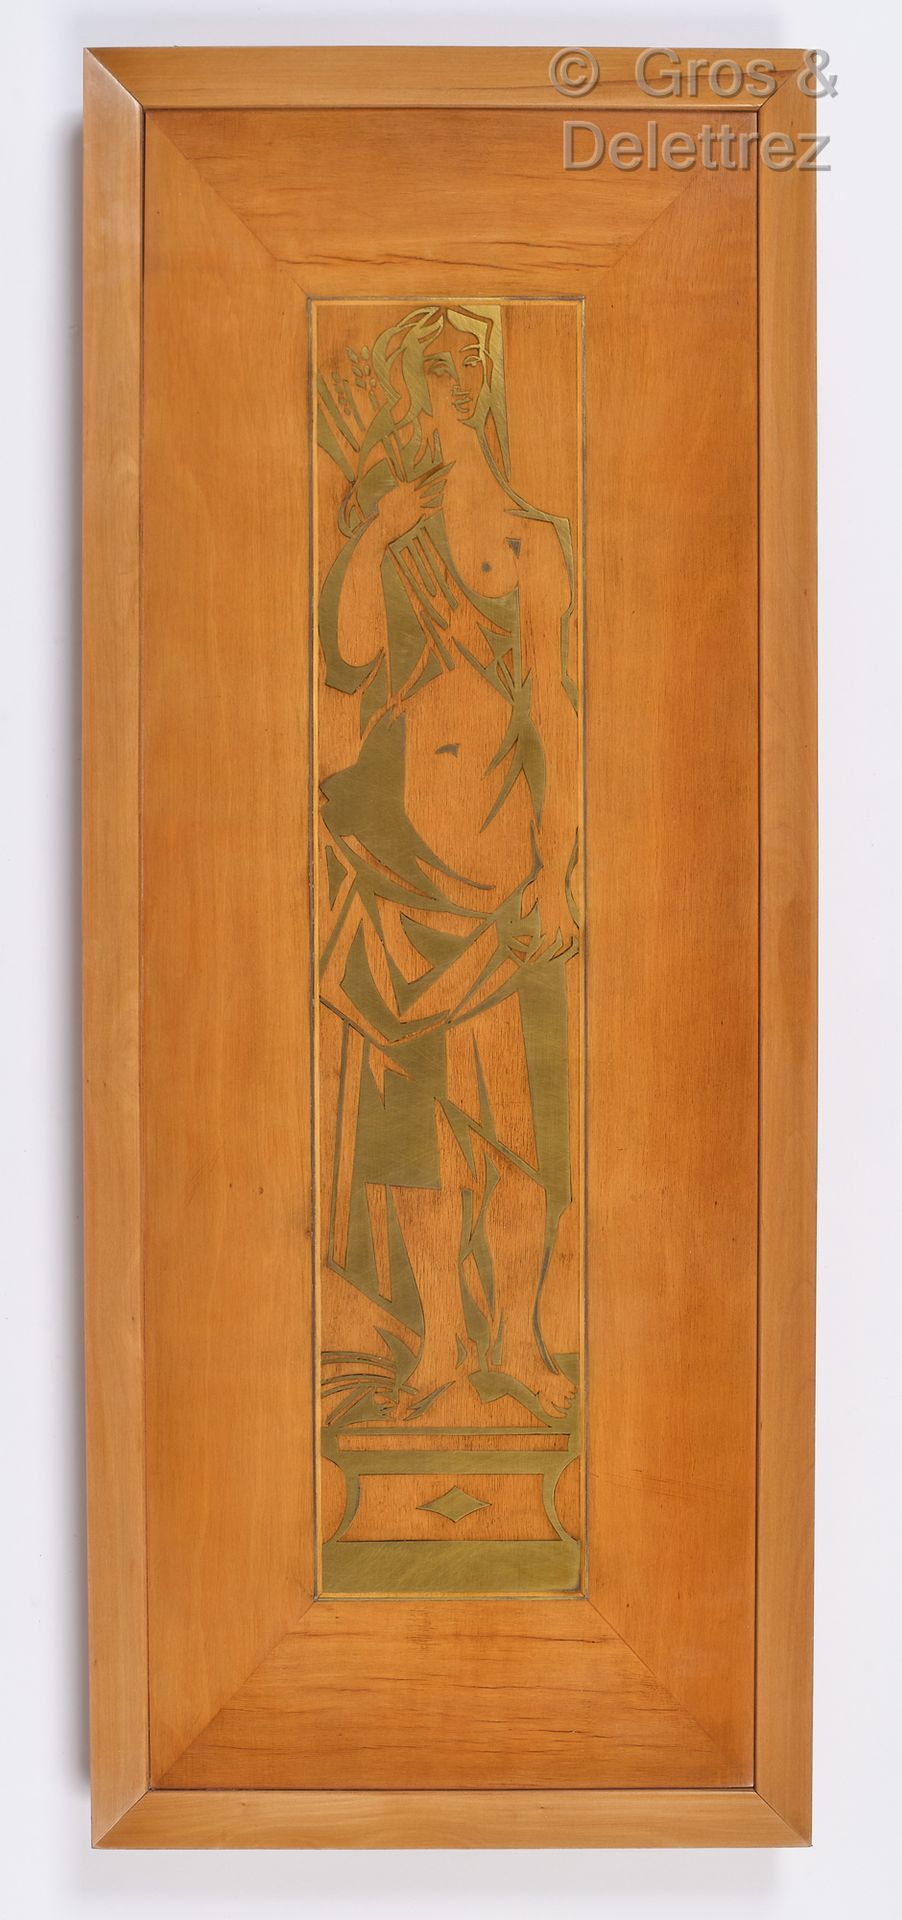 Null 1940年代的作品

镶嵌着女猎人戴安娜的木质和黄铜面板

70 x 28 cm